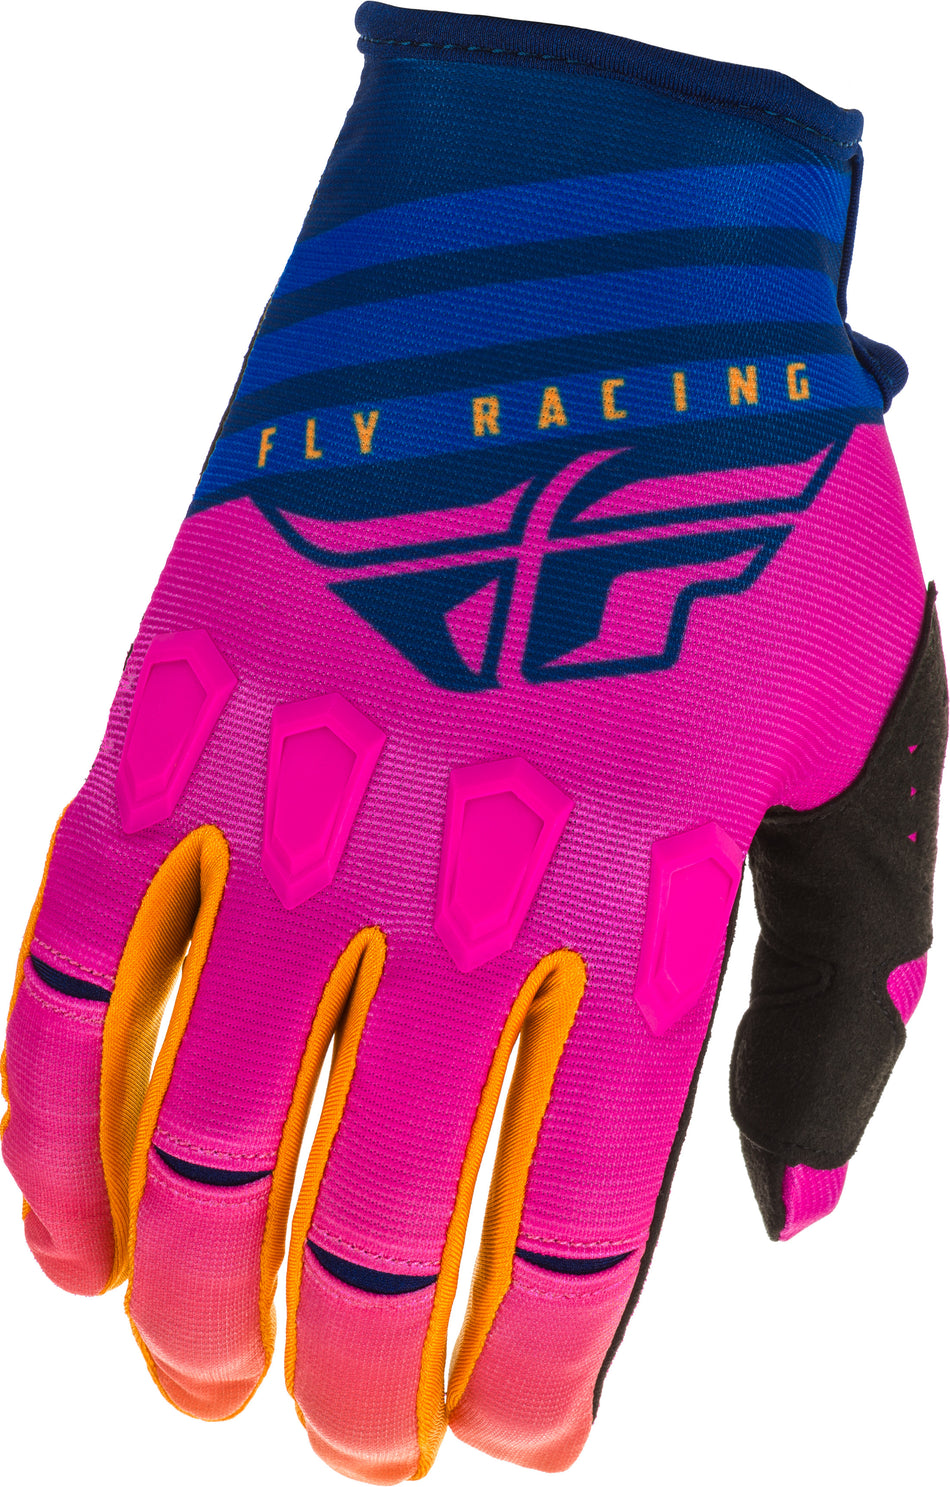 FLY RACING Kinetic K220 Gloves Midnight/Blue/Orange Sz 04 373-51904